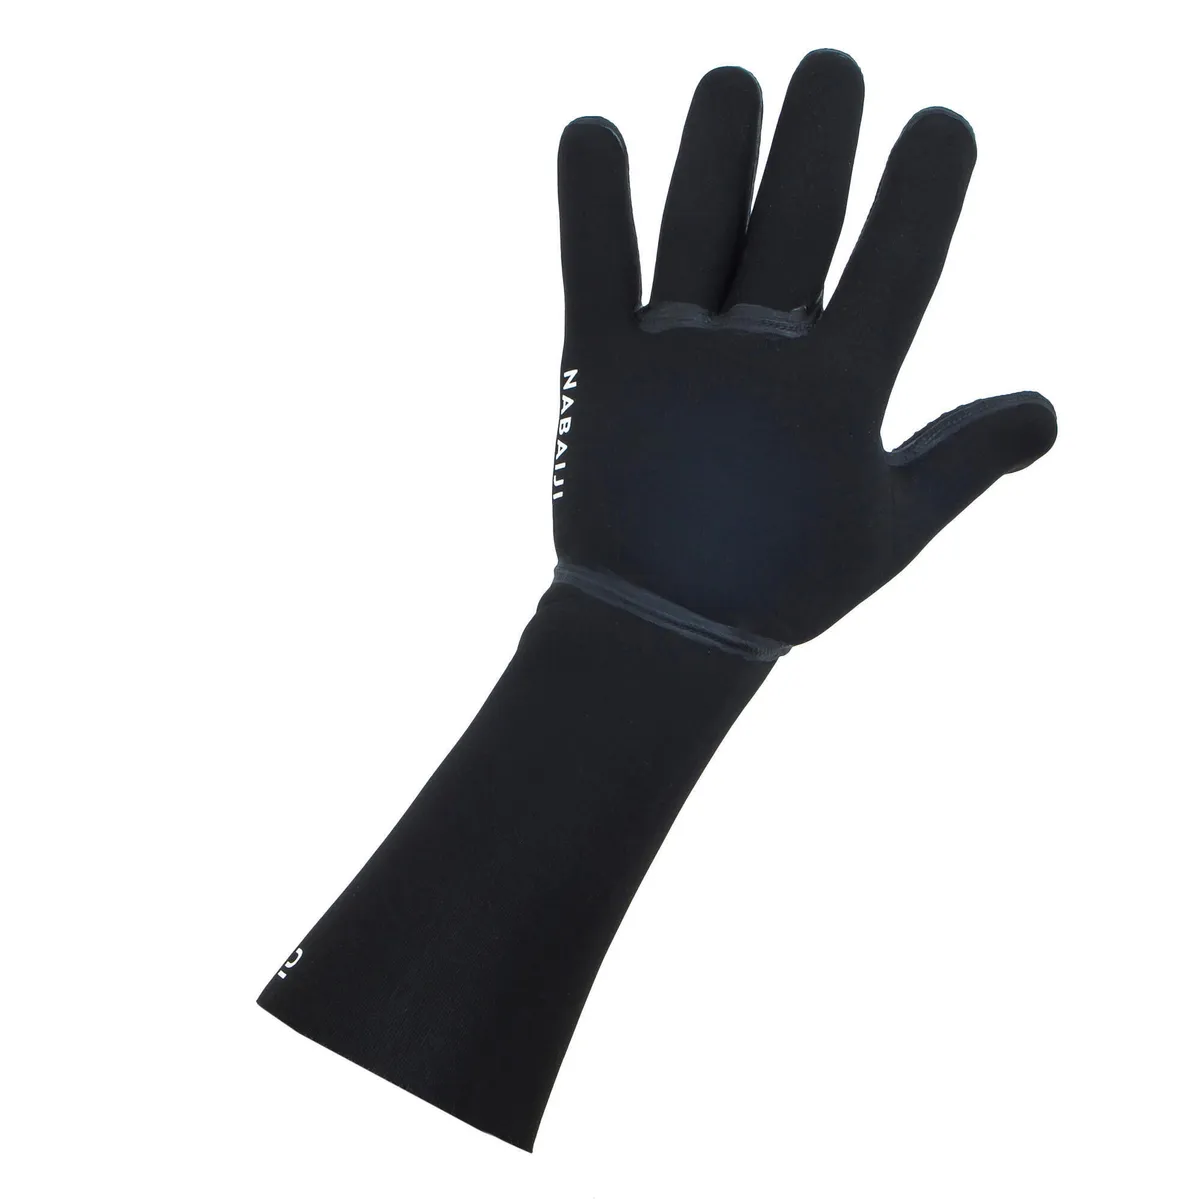 A black swim glove on a white background.